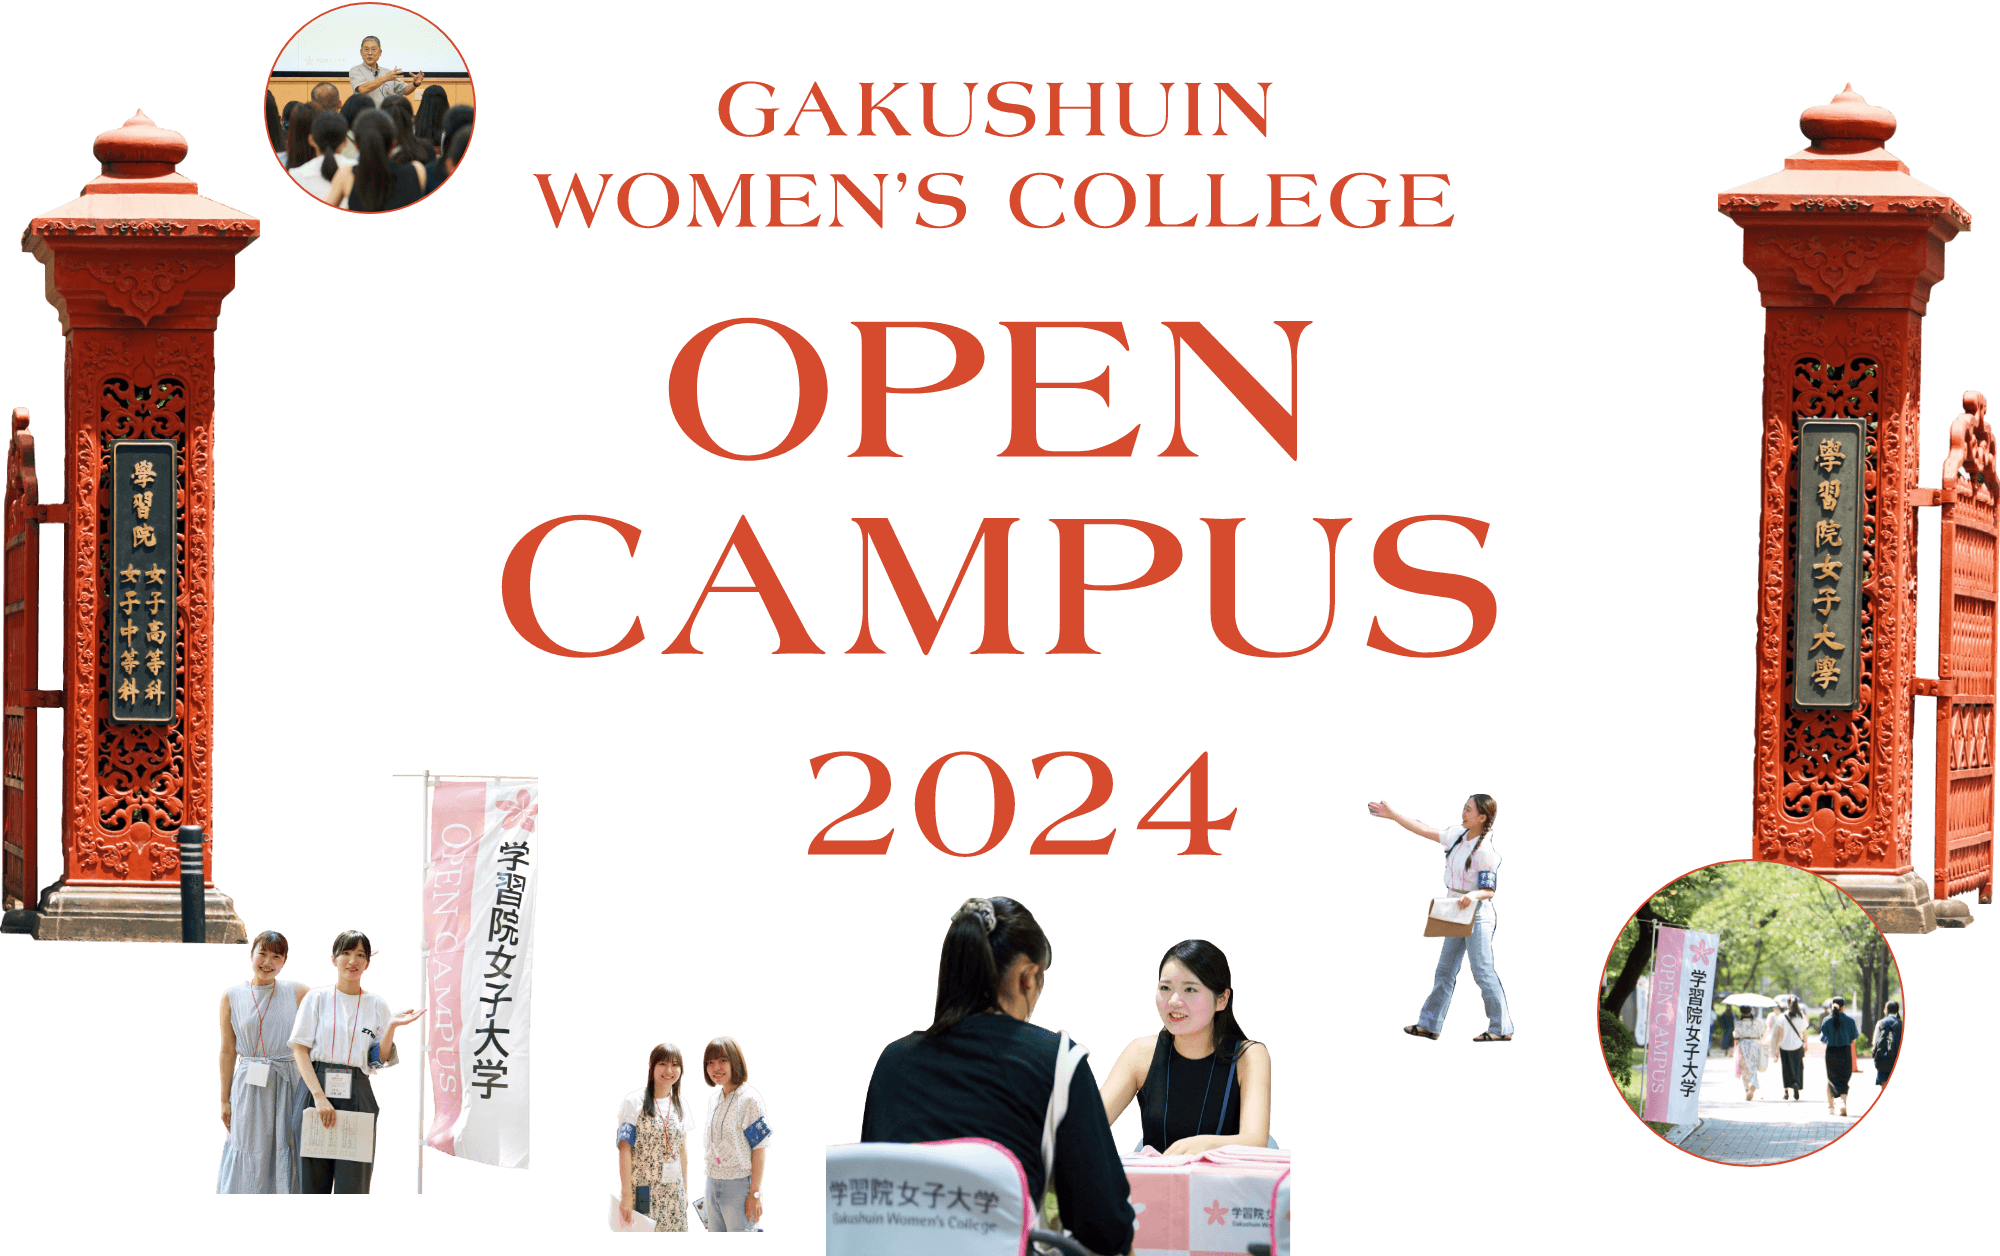 GAKUSHUIN WOMEN’S COLLEGE OPNE CAMPUS 2024